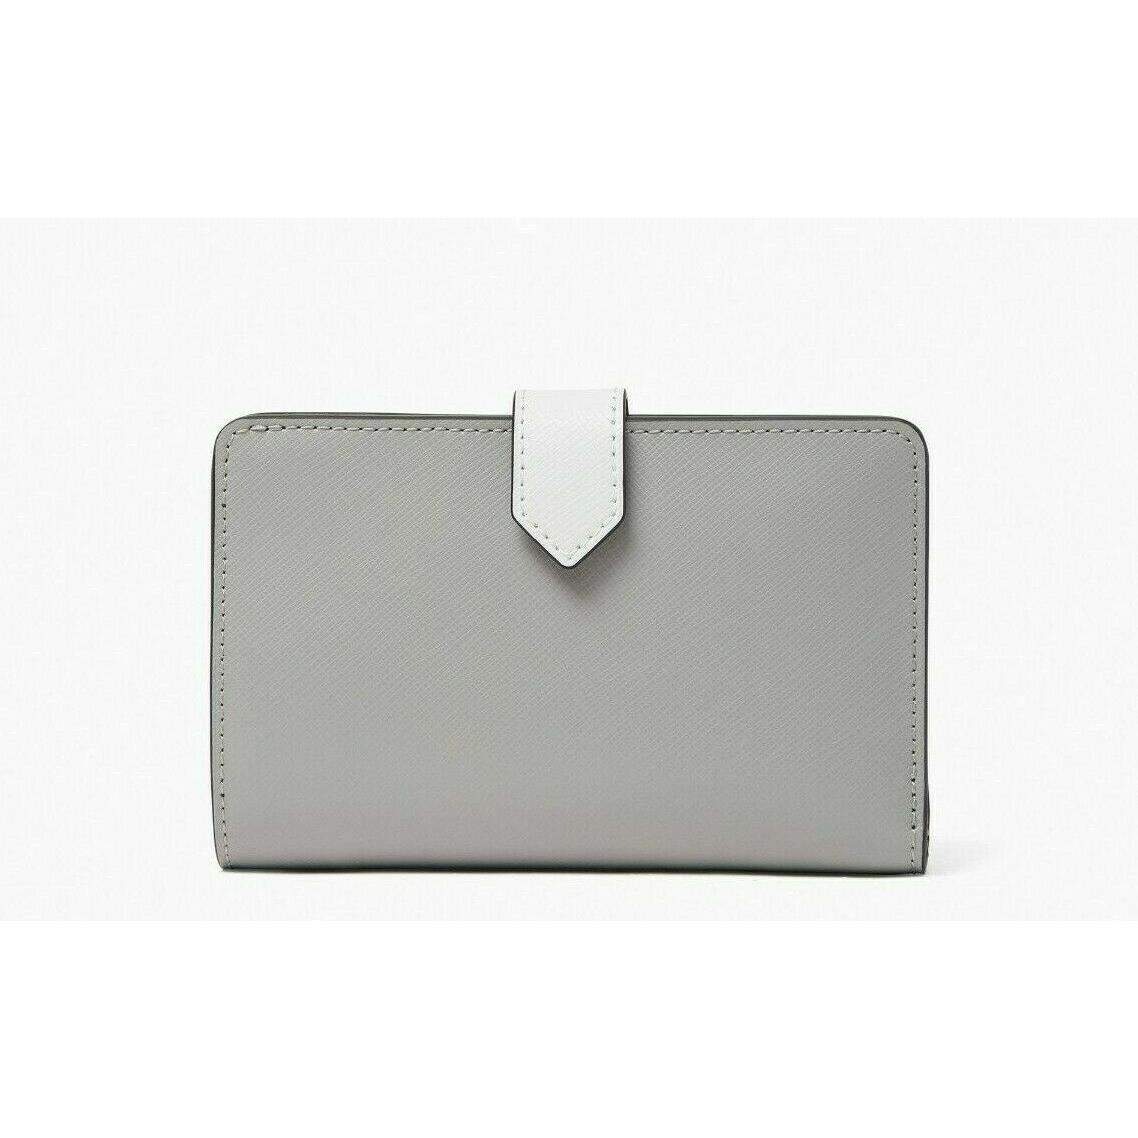 Kate Spade wallet  - Gray